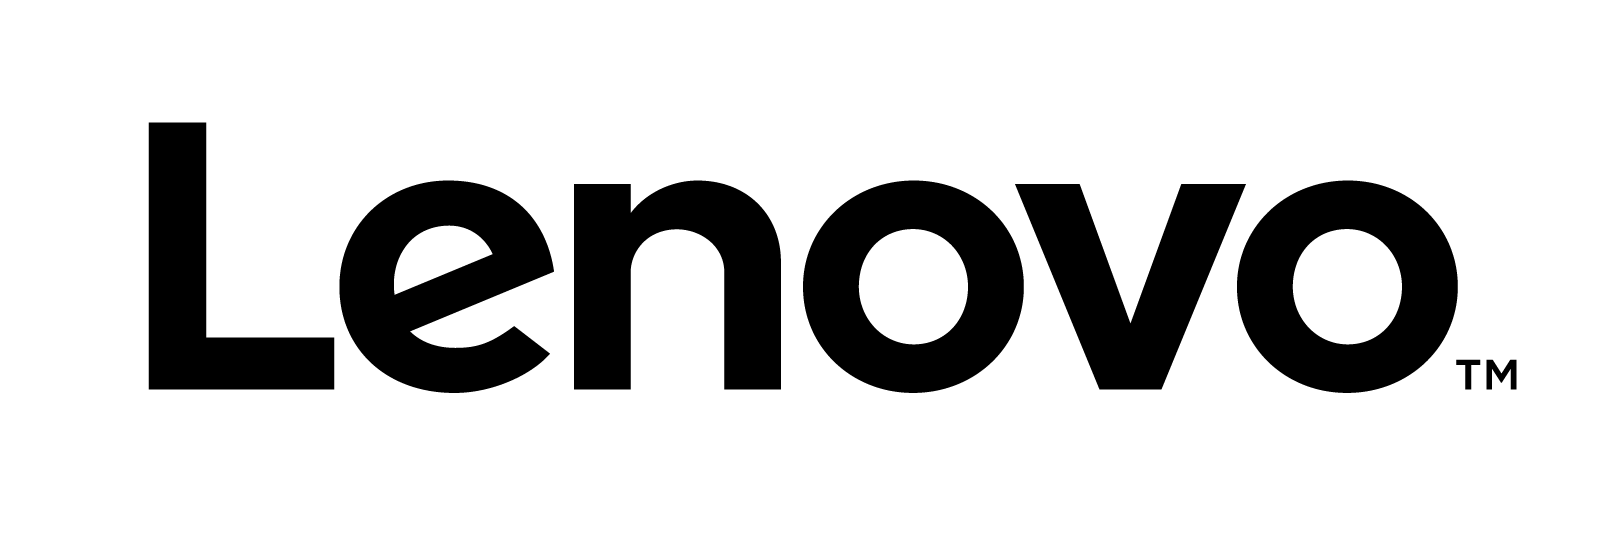 Lenovo Logo - Lenovo's new logo aims for “fashion brand” feel | Marketing Interactive